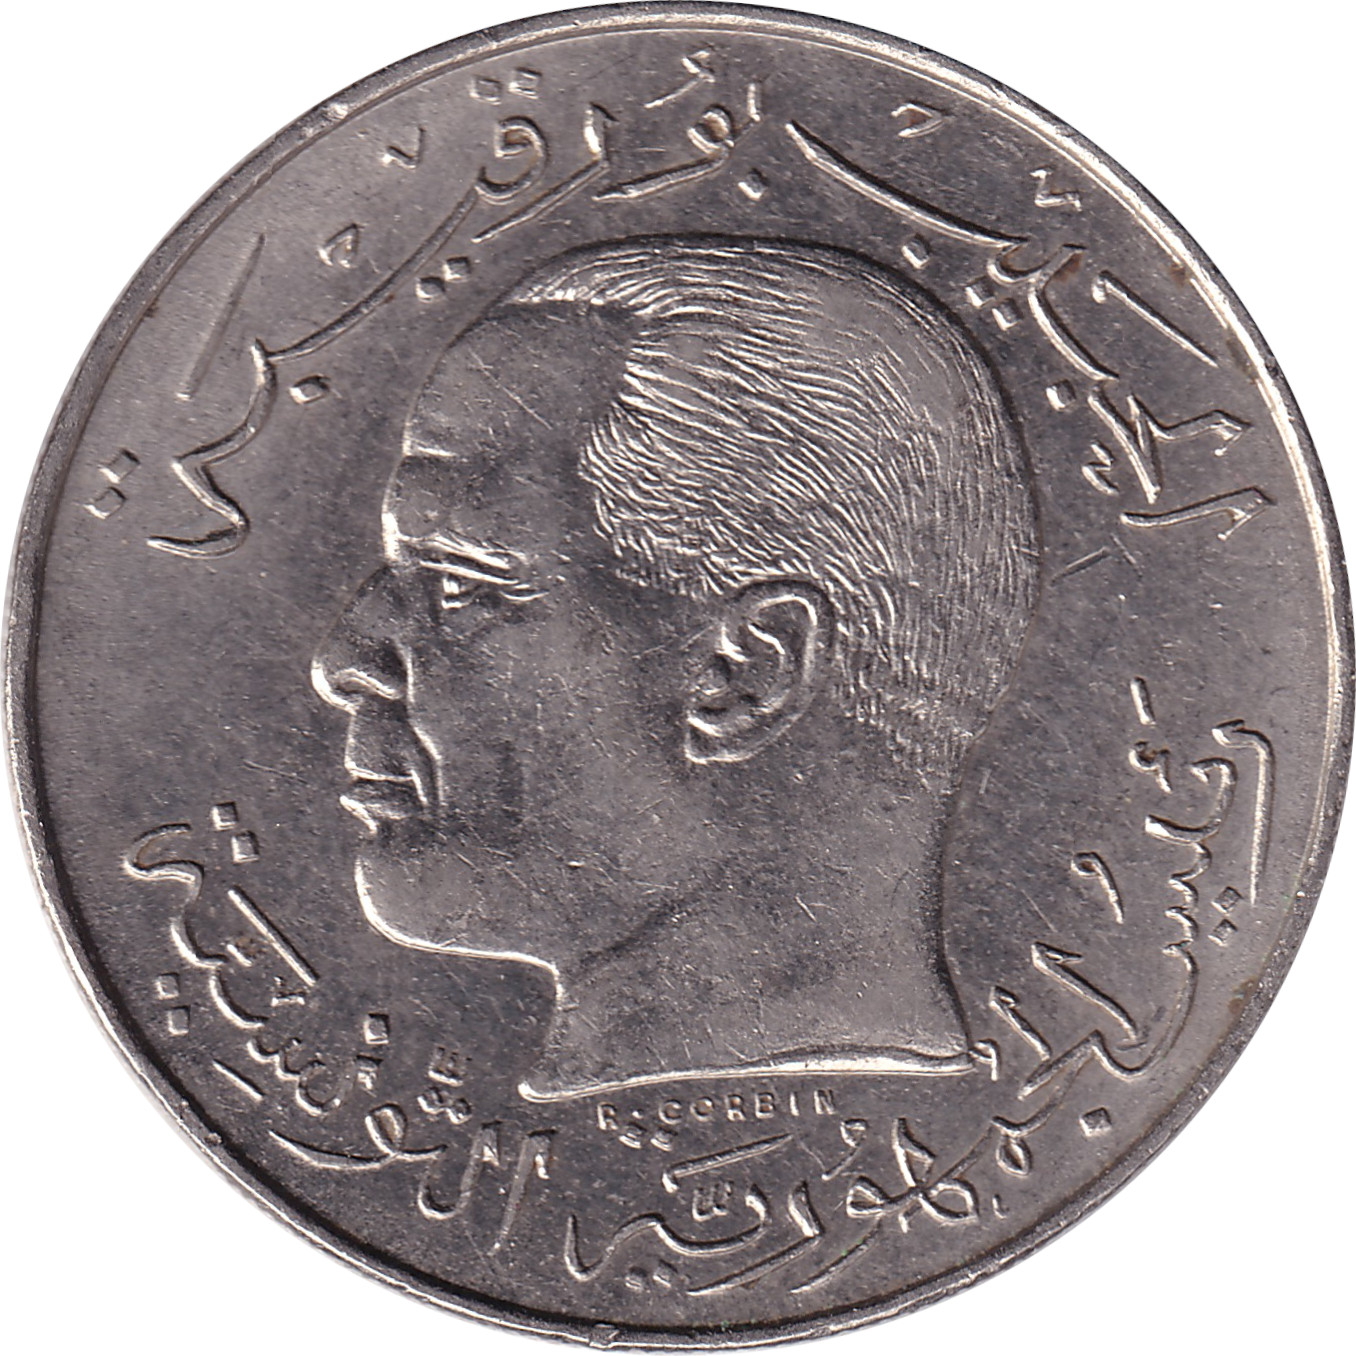 1/2 dinar - Habib Bourguiba - Nickel